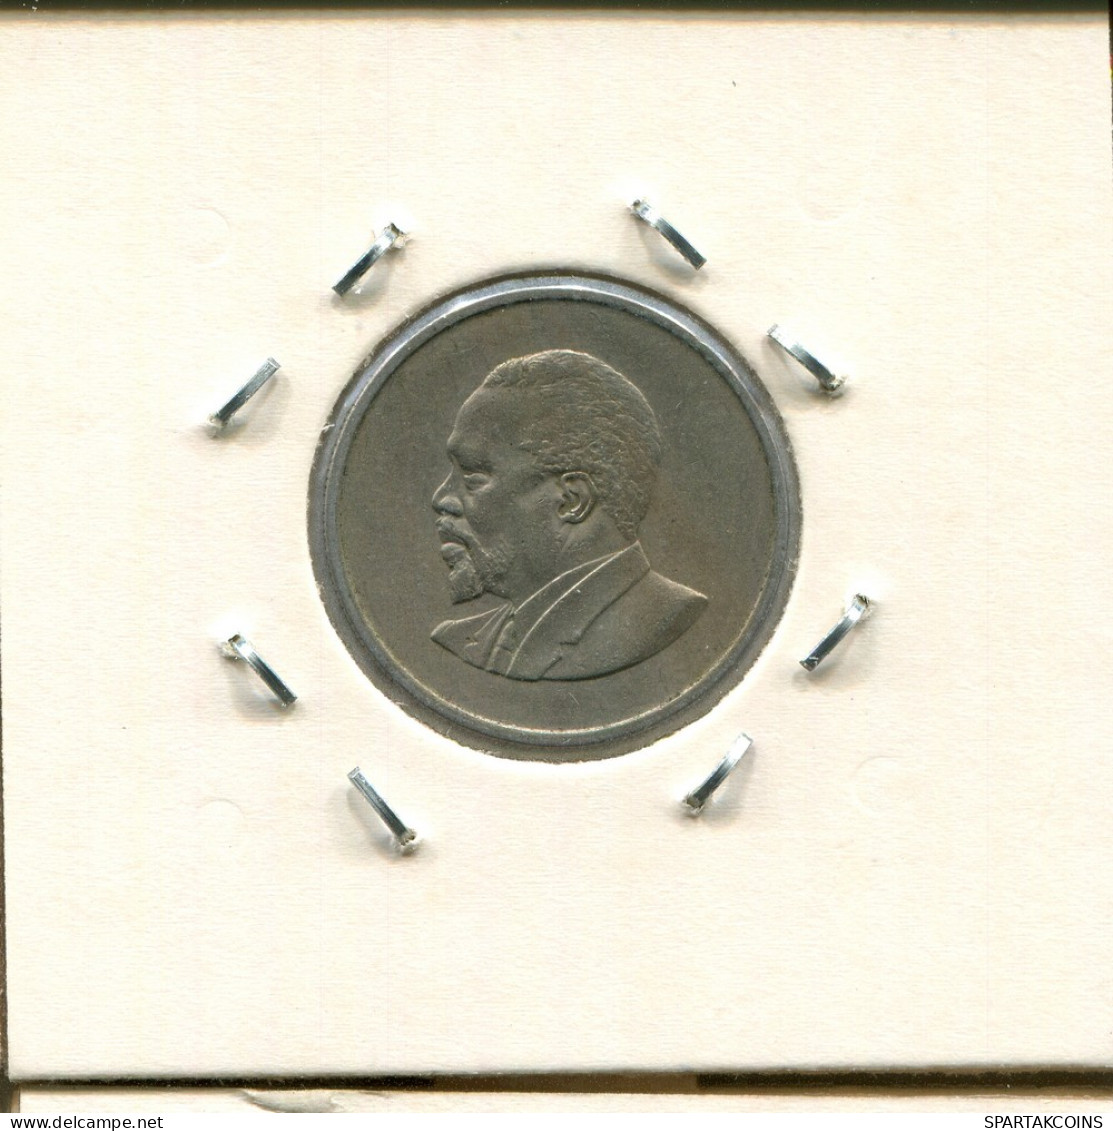 50 CENTS 1966 KENYA Coin #AS327.U - Kenia